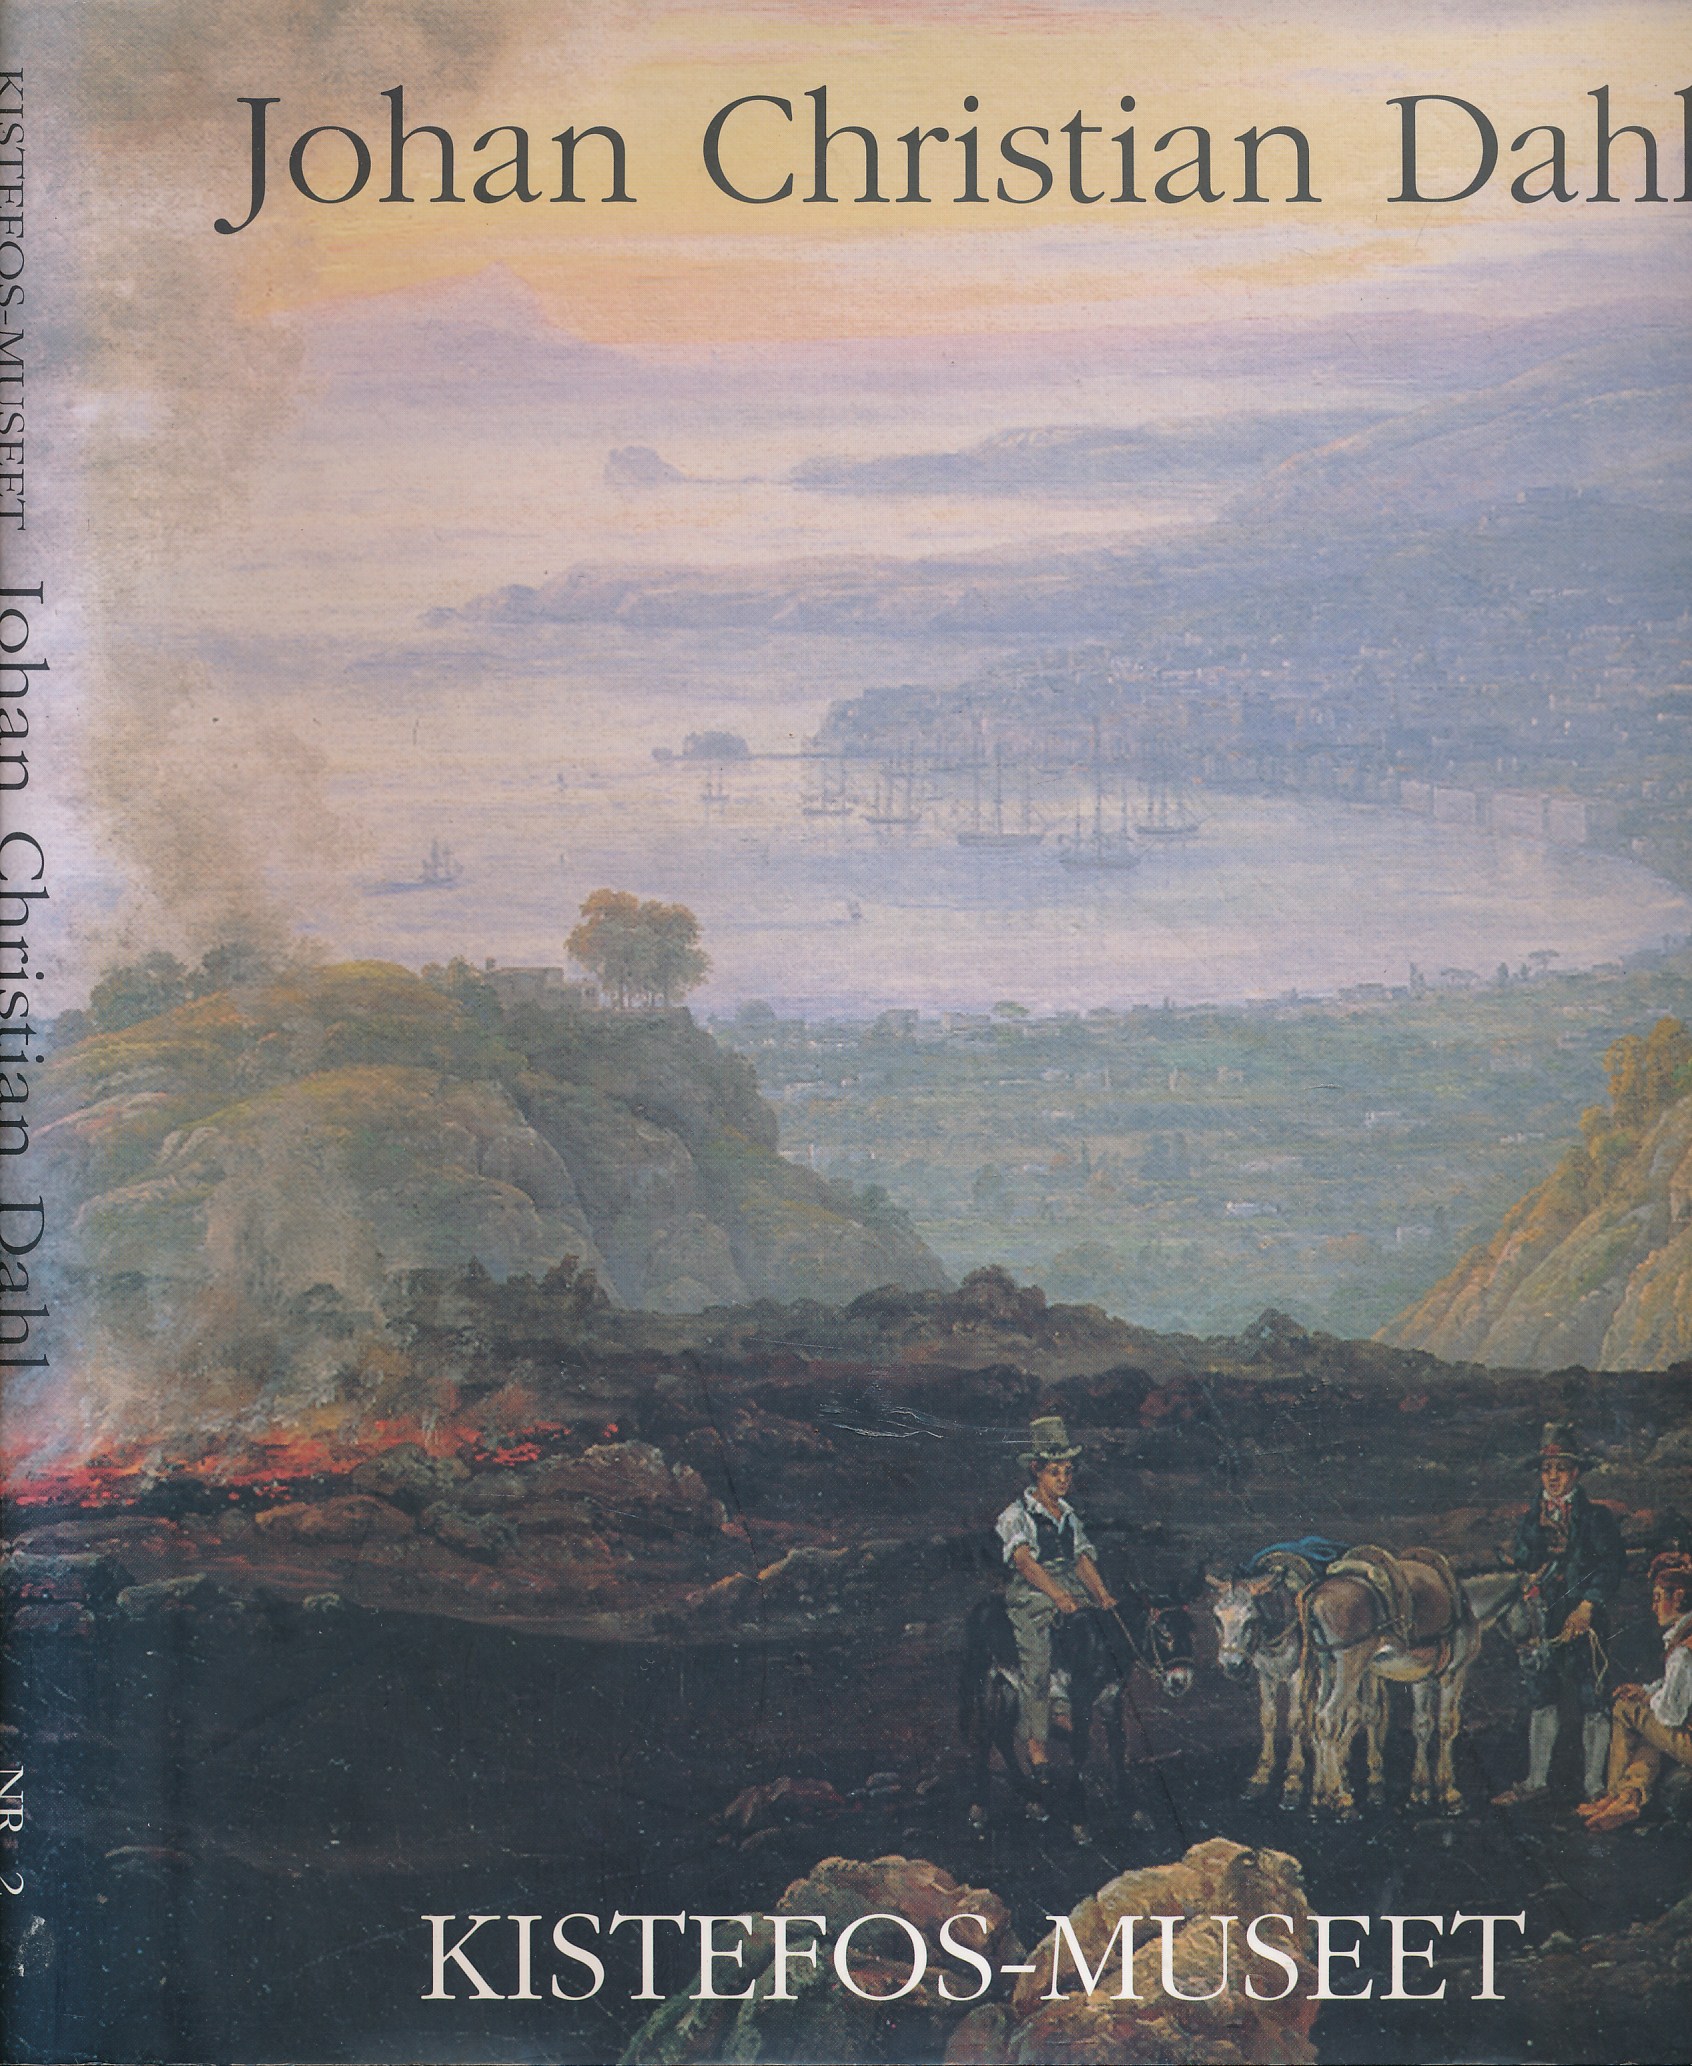 Johan Christian Dahl. Kistefos- Museet